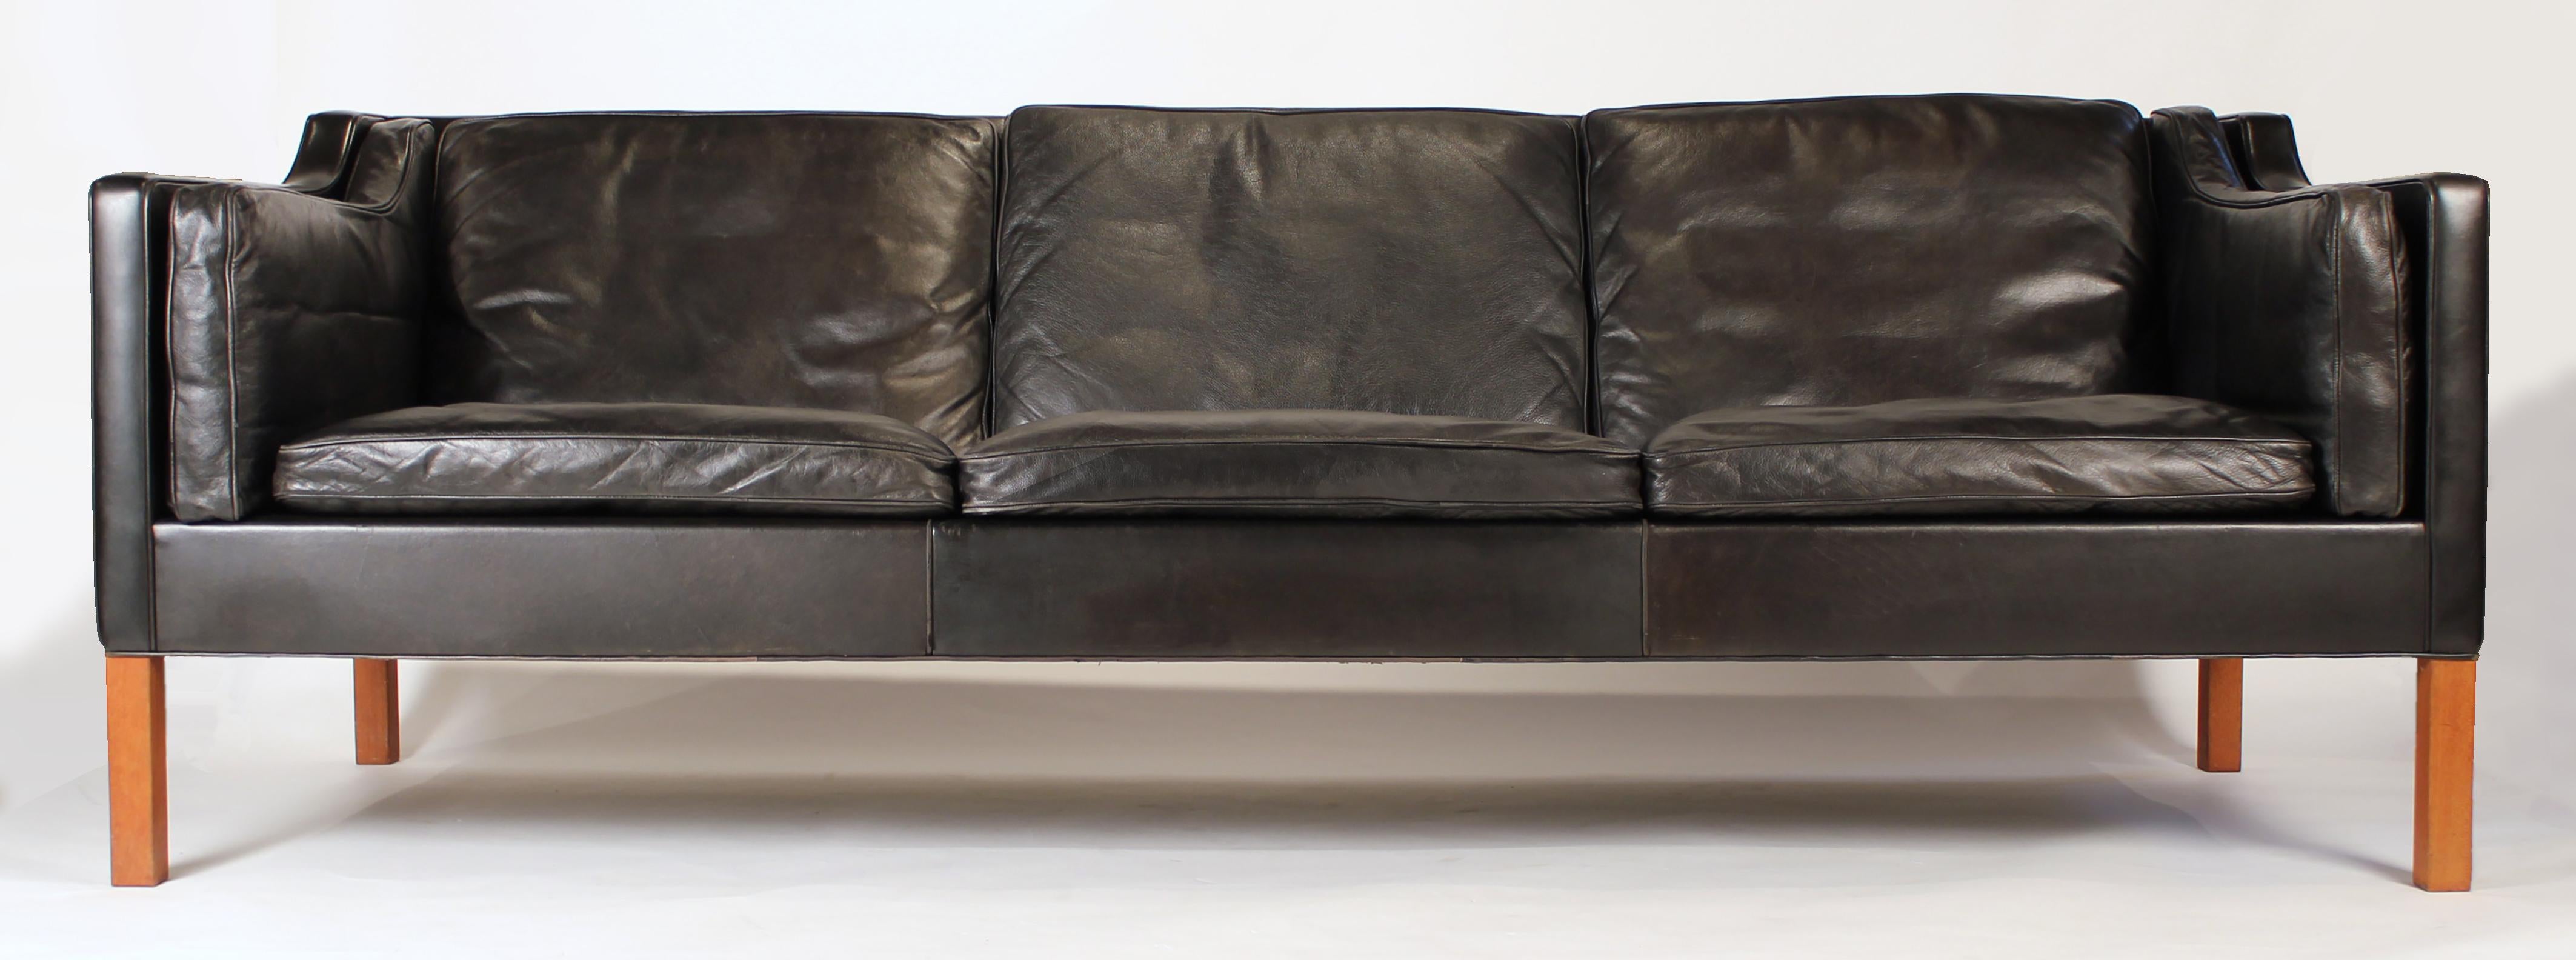 Danish Sofa in Black Leather by Borge Mogensen